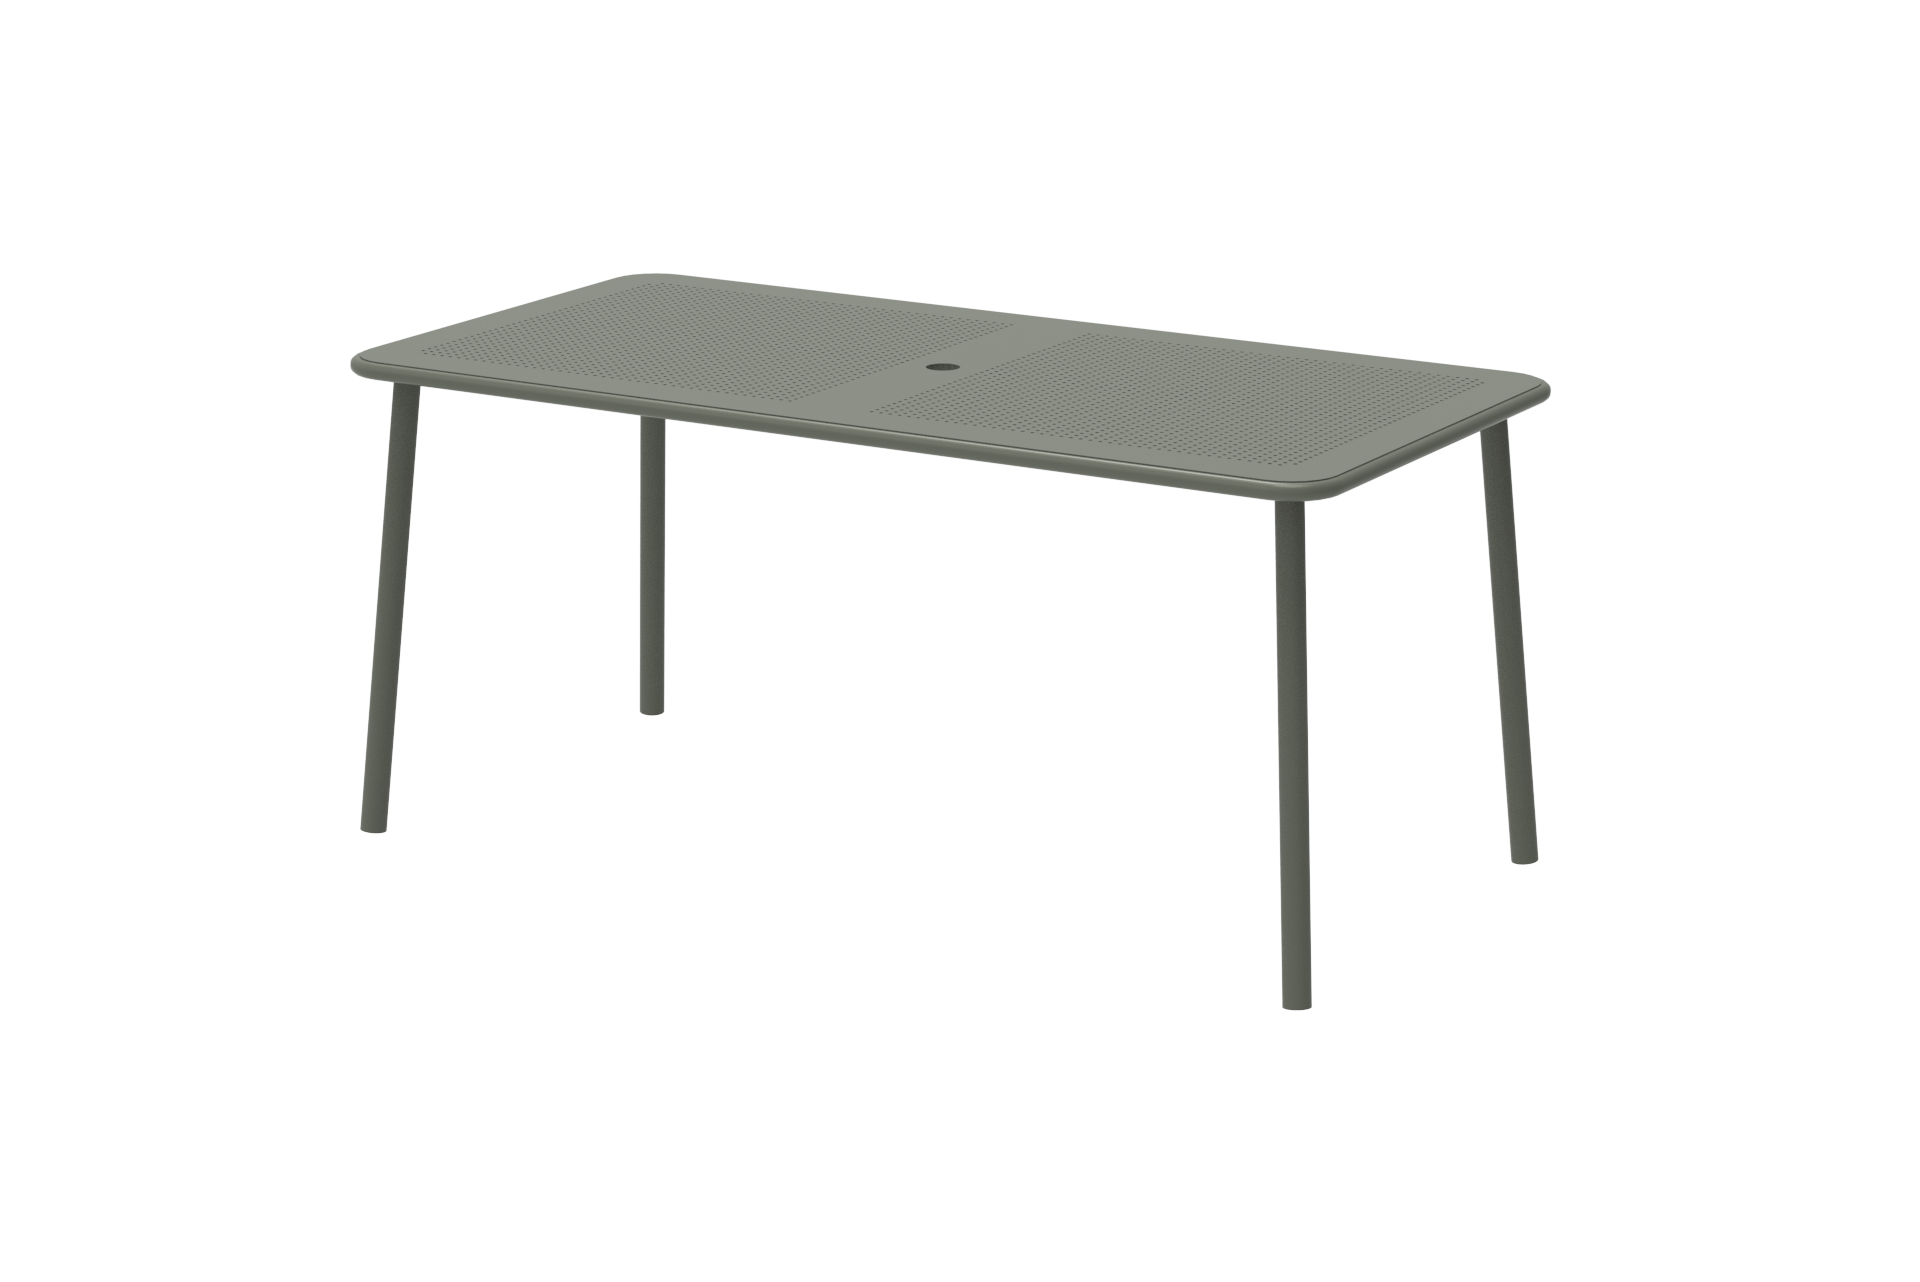 Verona Table 1.6m x 0.8m